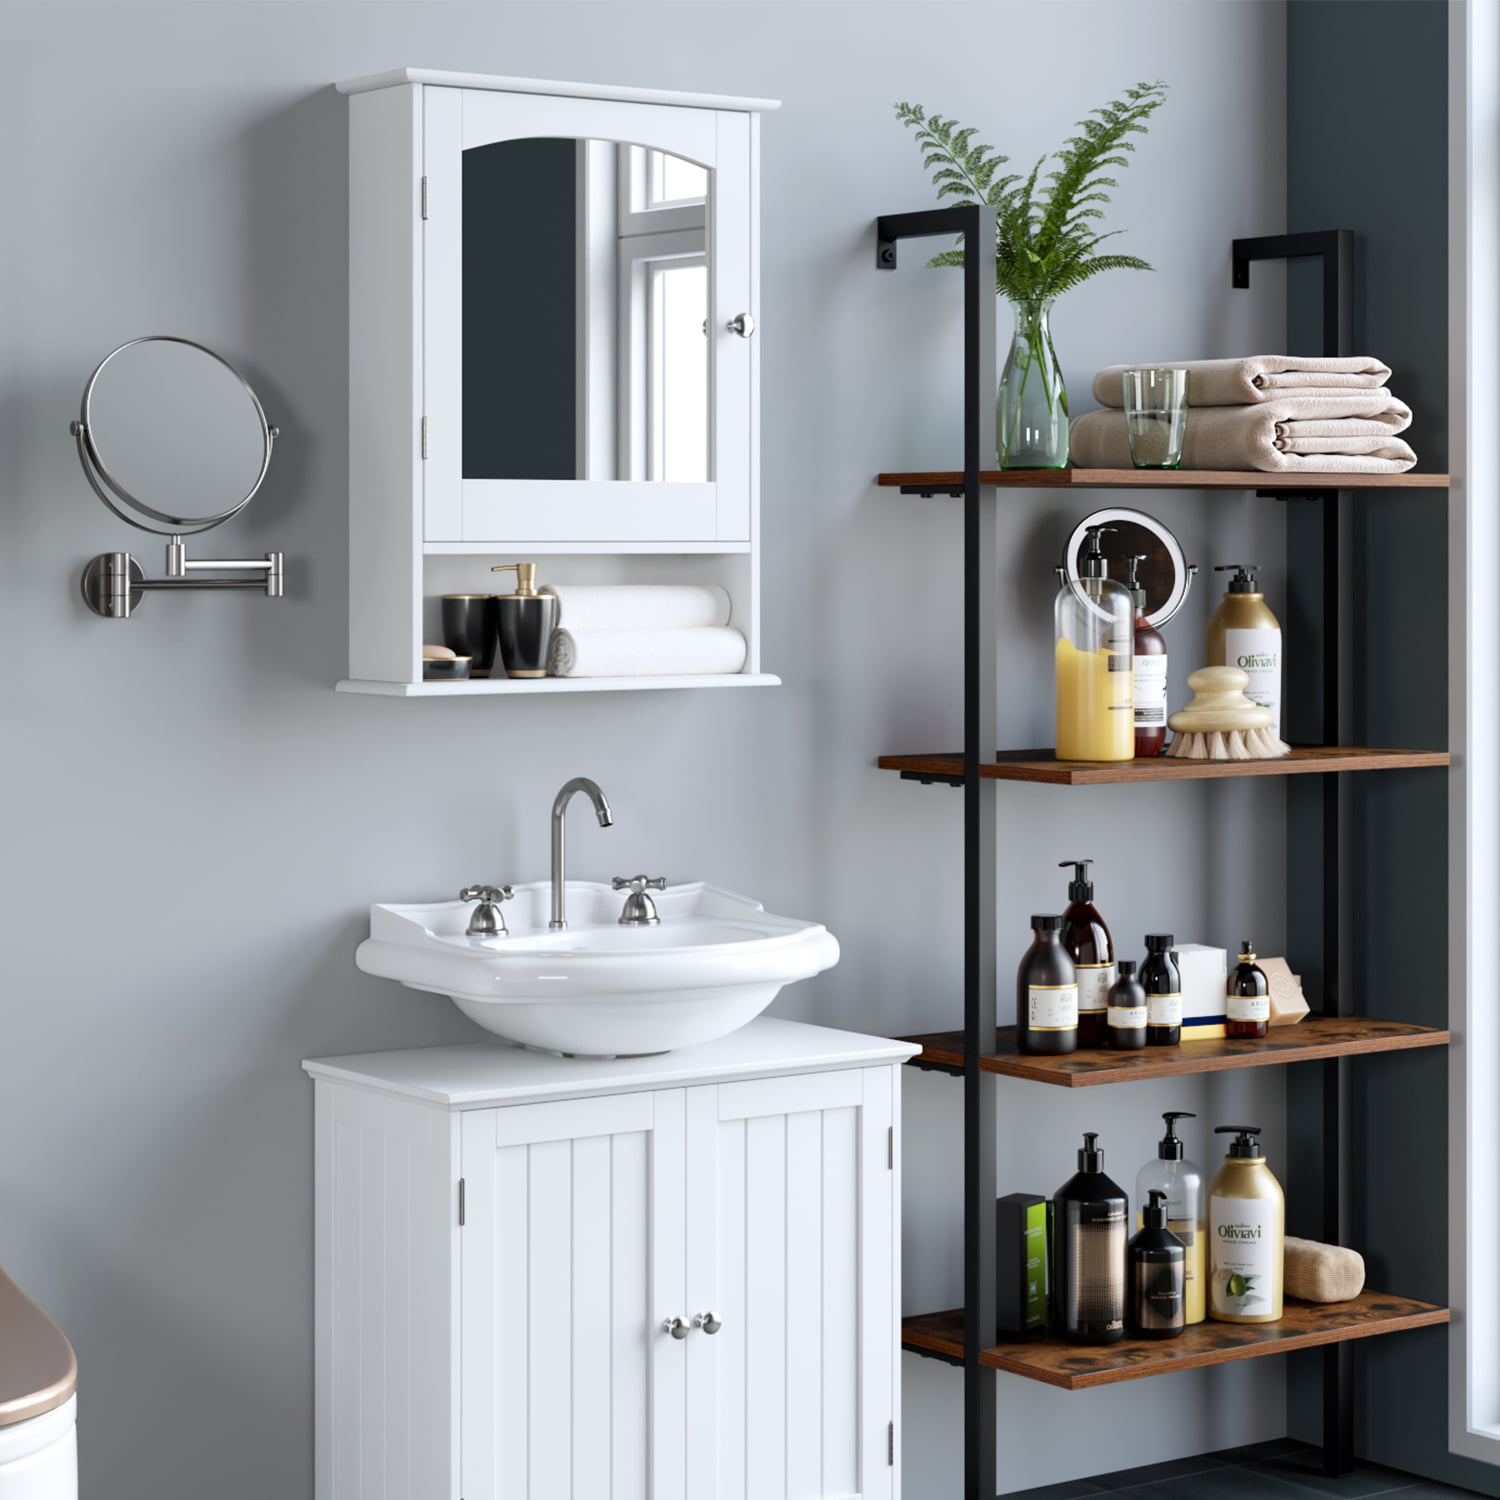 Homfa Modern Bathroom Floor Medicine Cabinet with 5 Drawers, Free Standing  Storage Organizer Unit for Living Room Bedroom, White